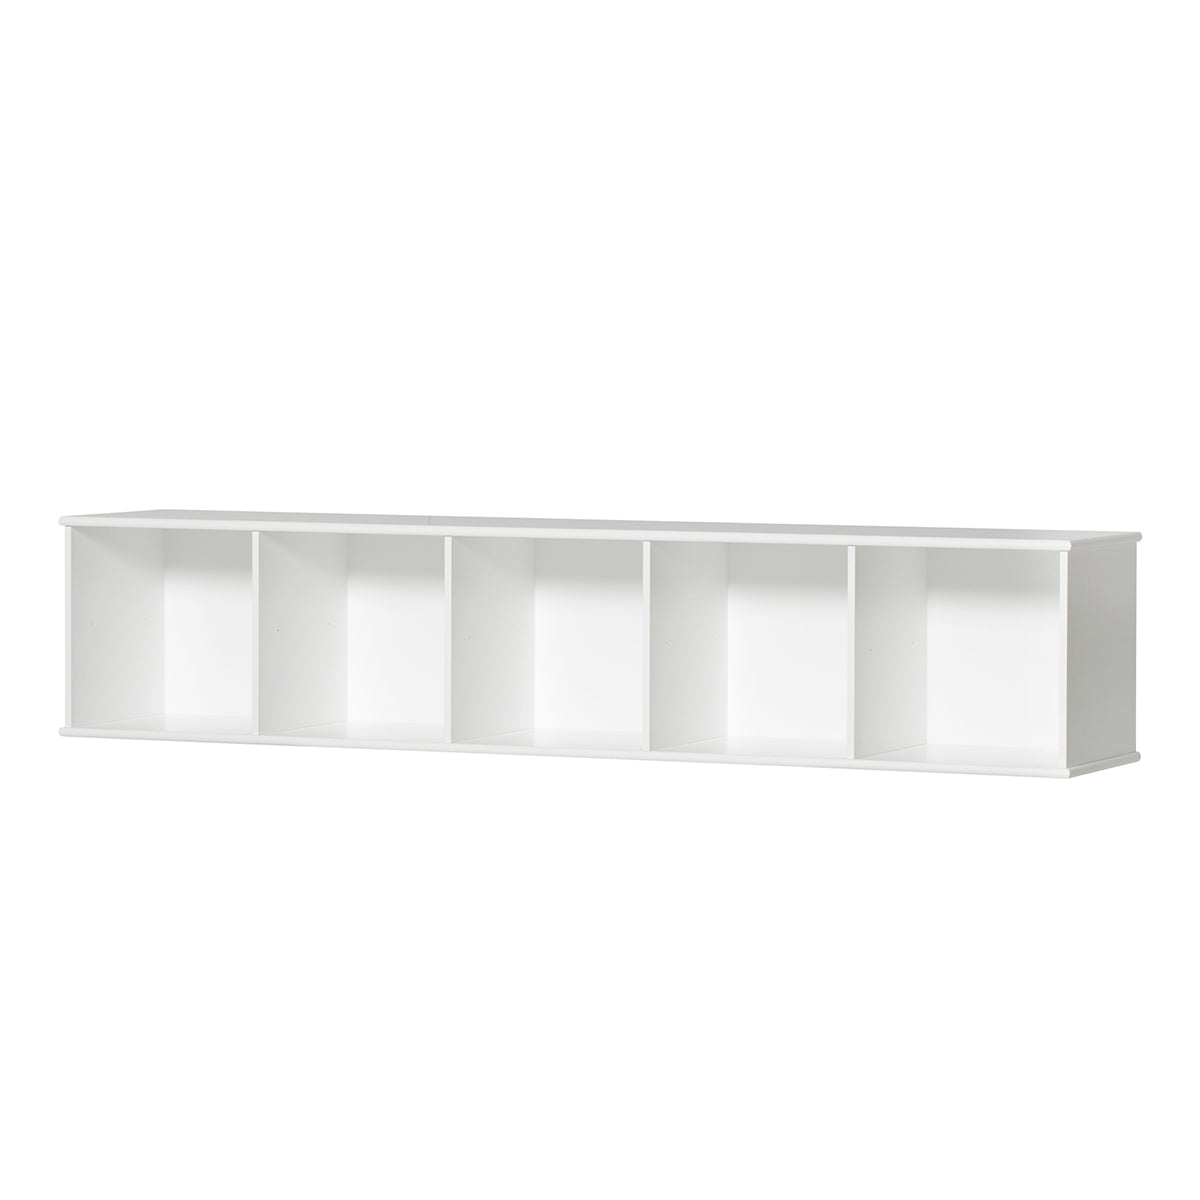 Oliver Furniture Wood Shelf 5 x 1 horizontal